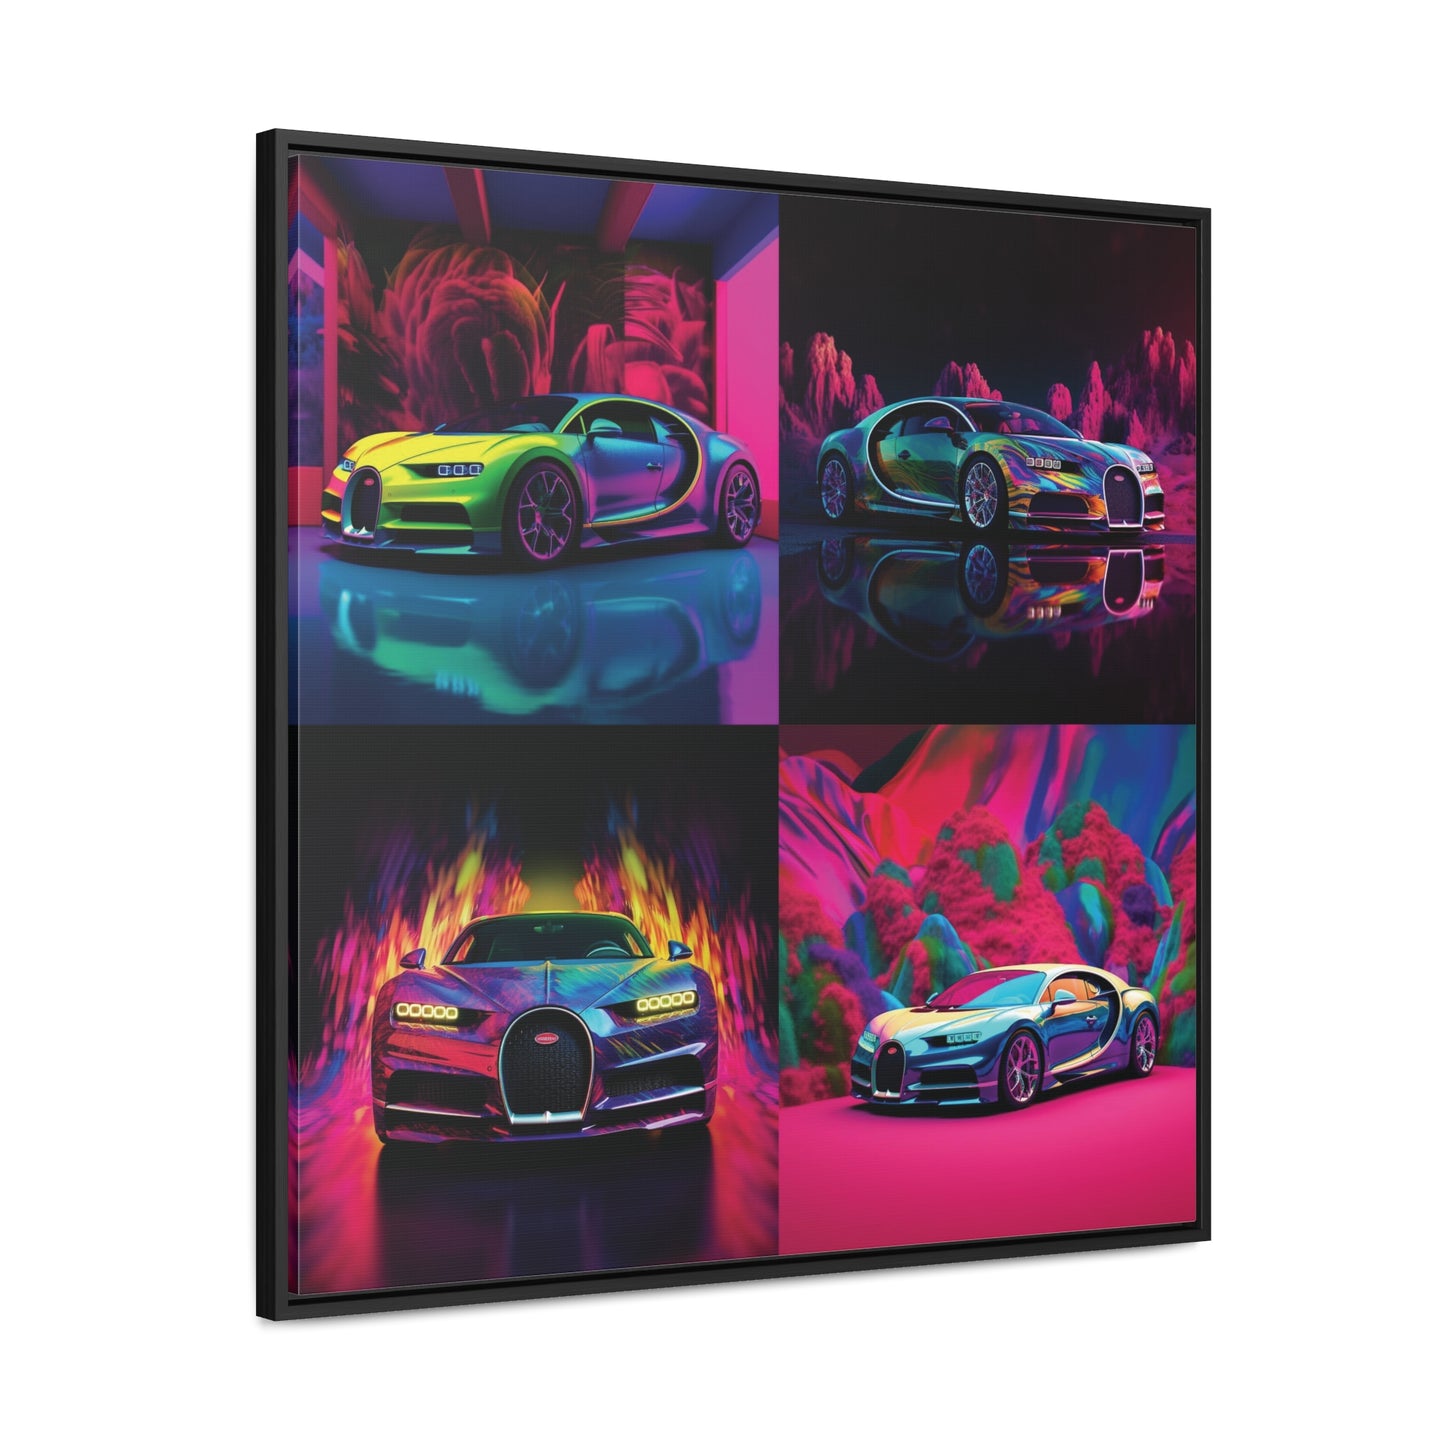 Gallery Canvas Wraps, Square Frame Florescent Bugatti Flair 5